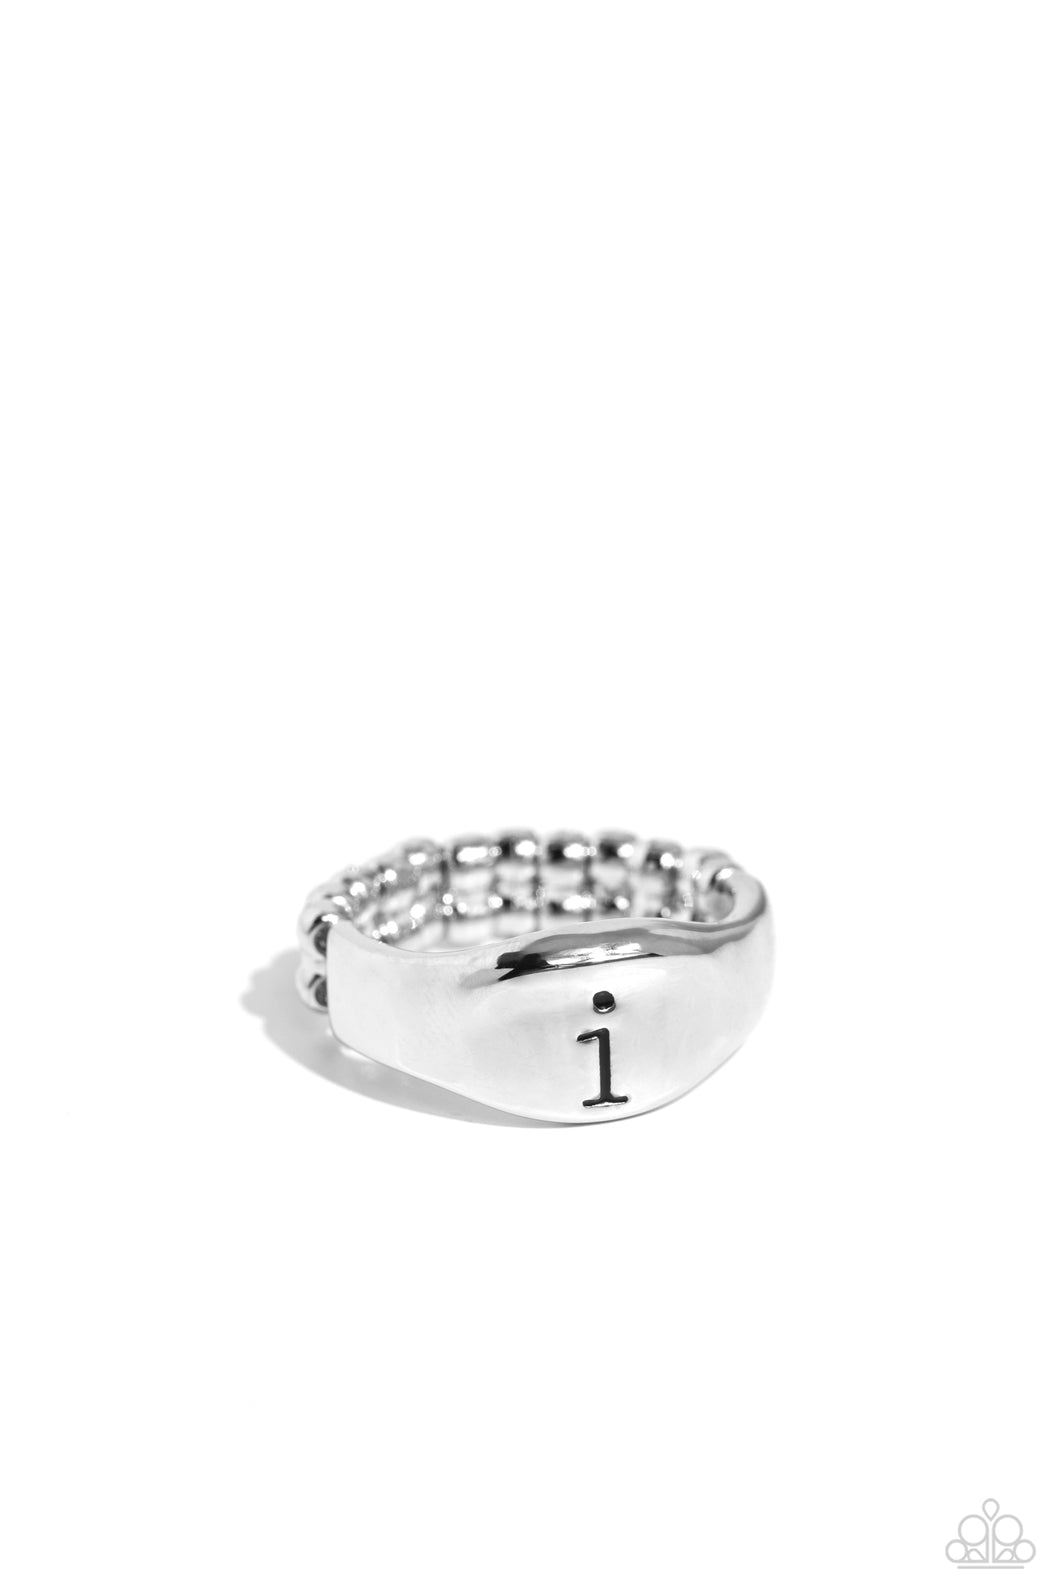 Monogram Memento - Silver - I Initial Ring